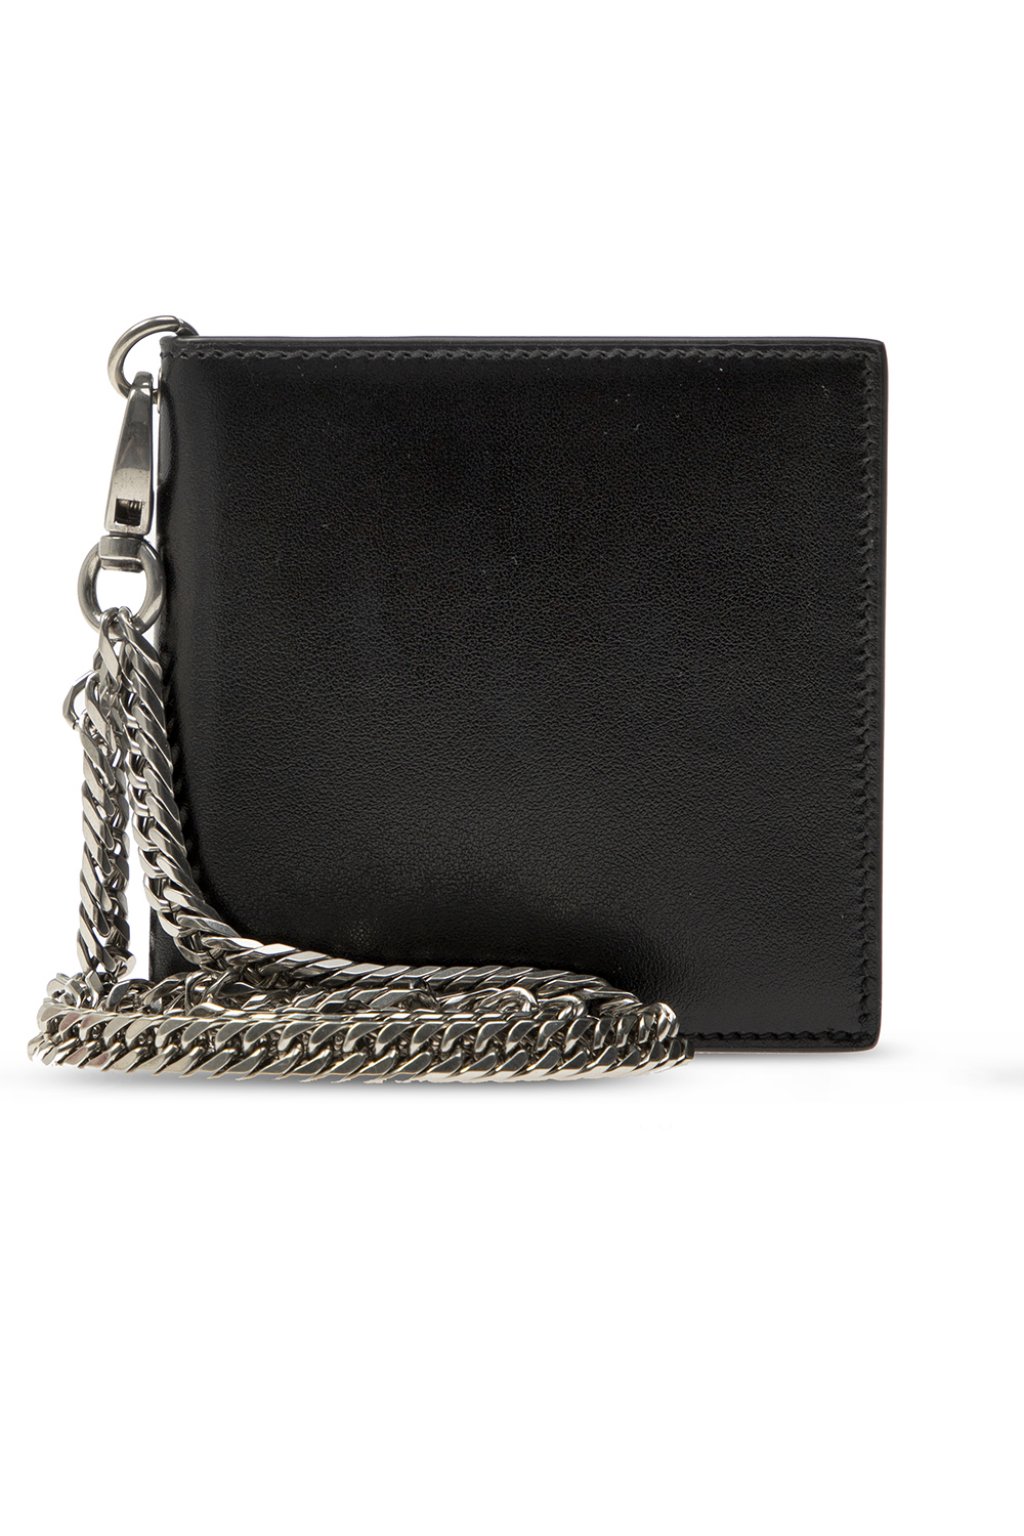 mcqueen wallet on chain